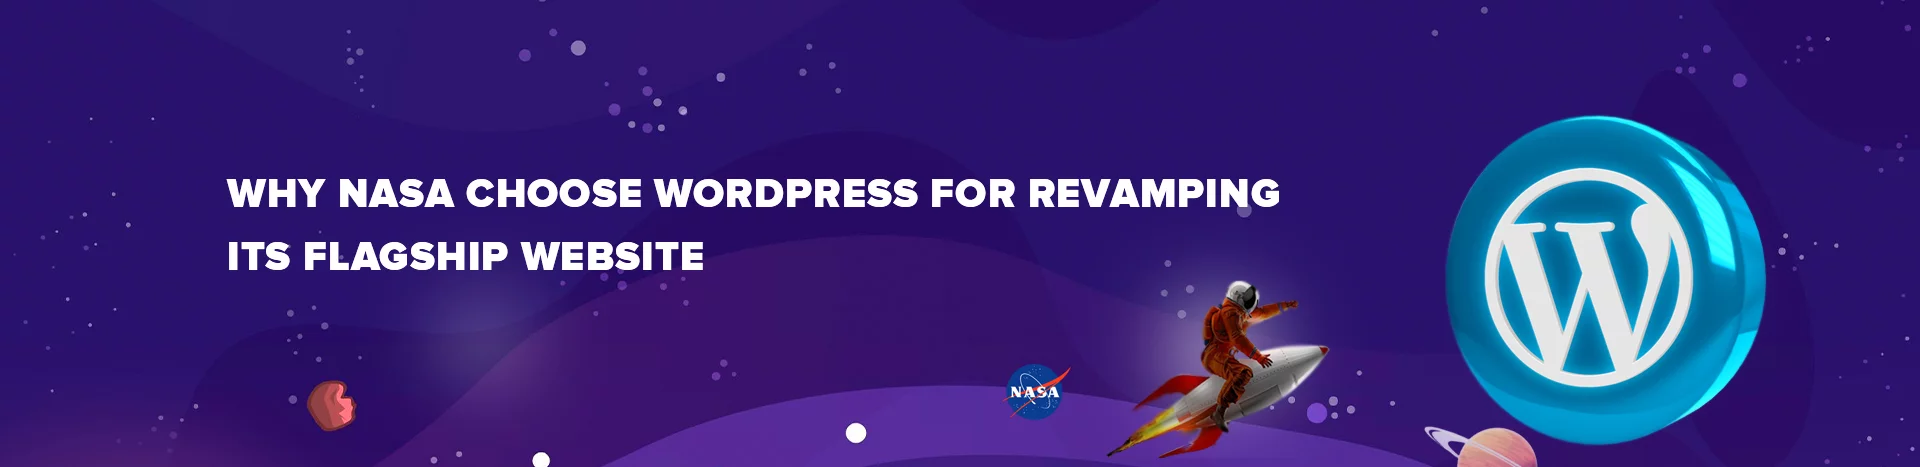 NASA-Redesigned-their-website-wordpress